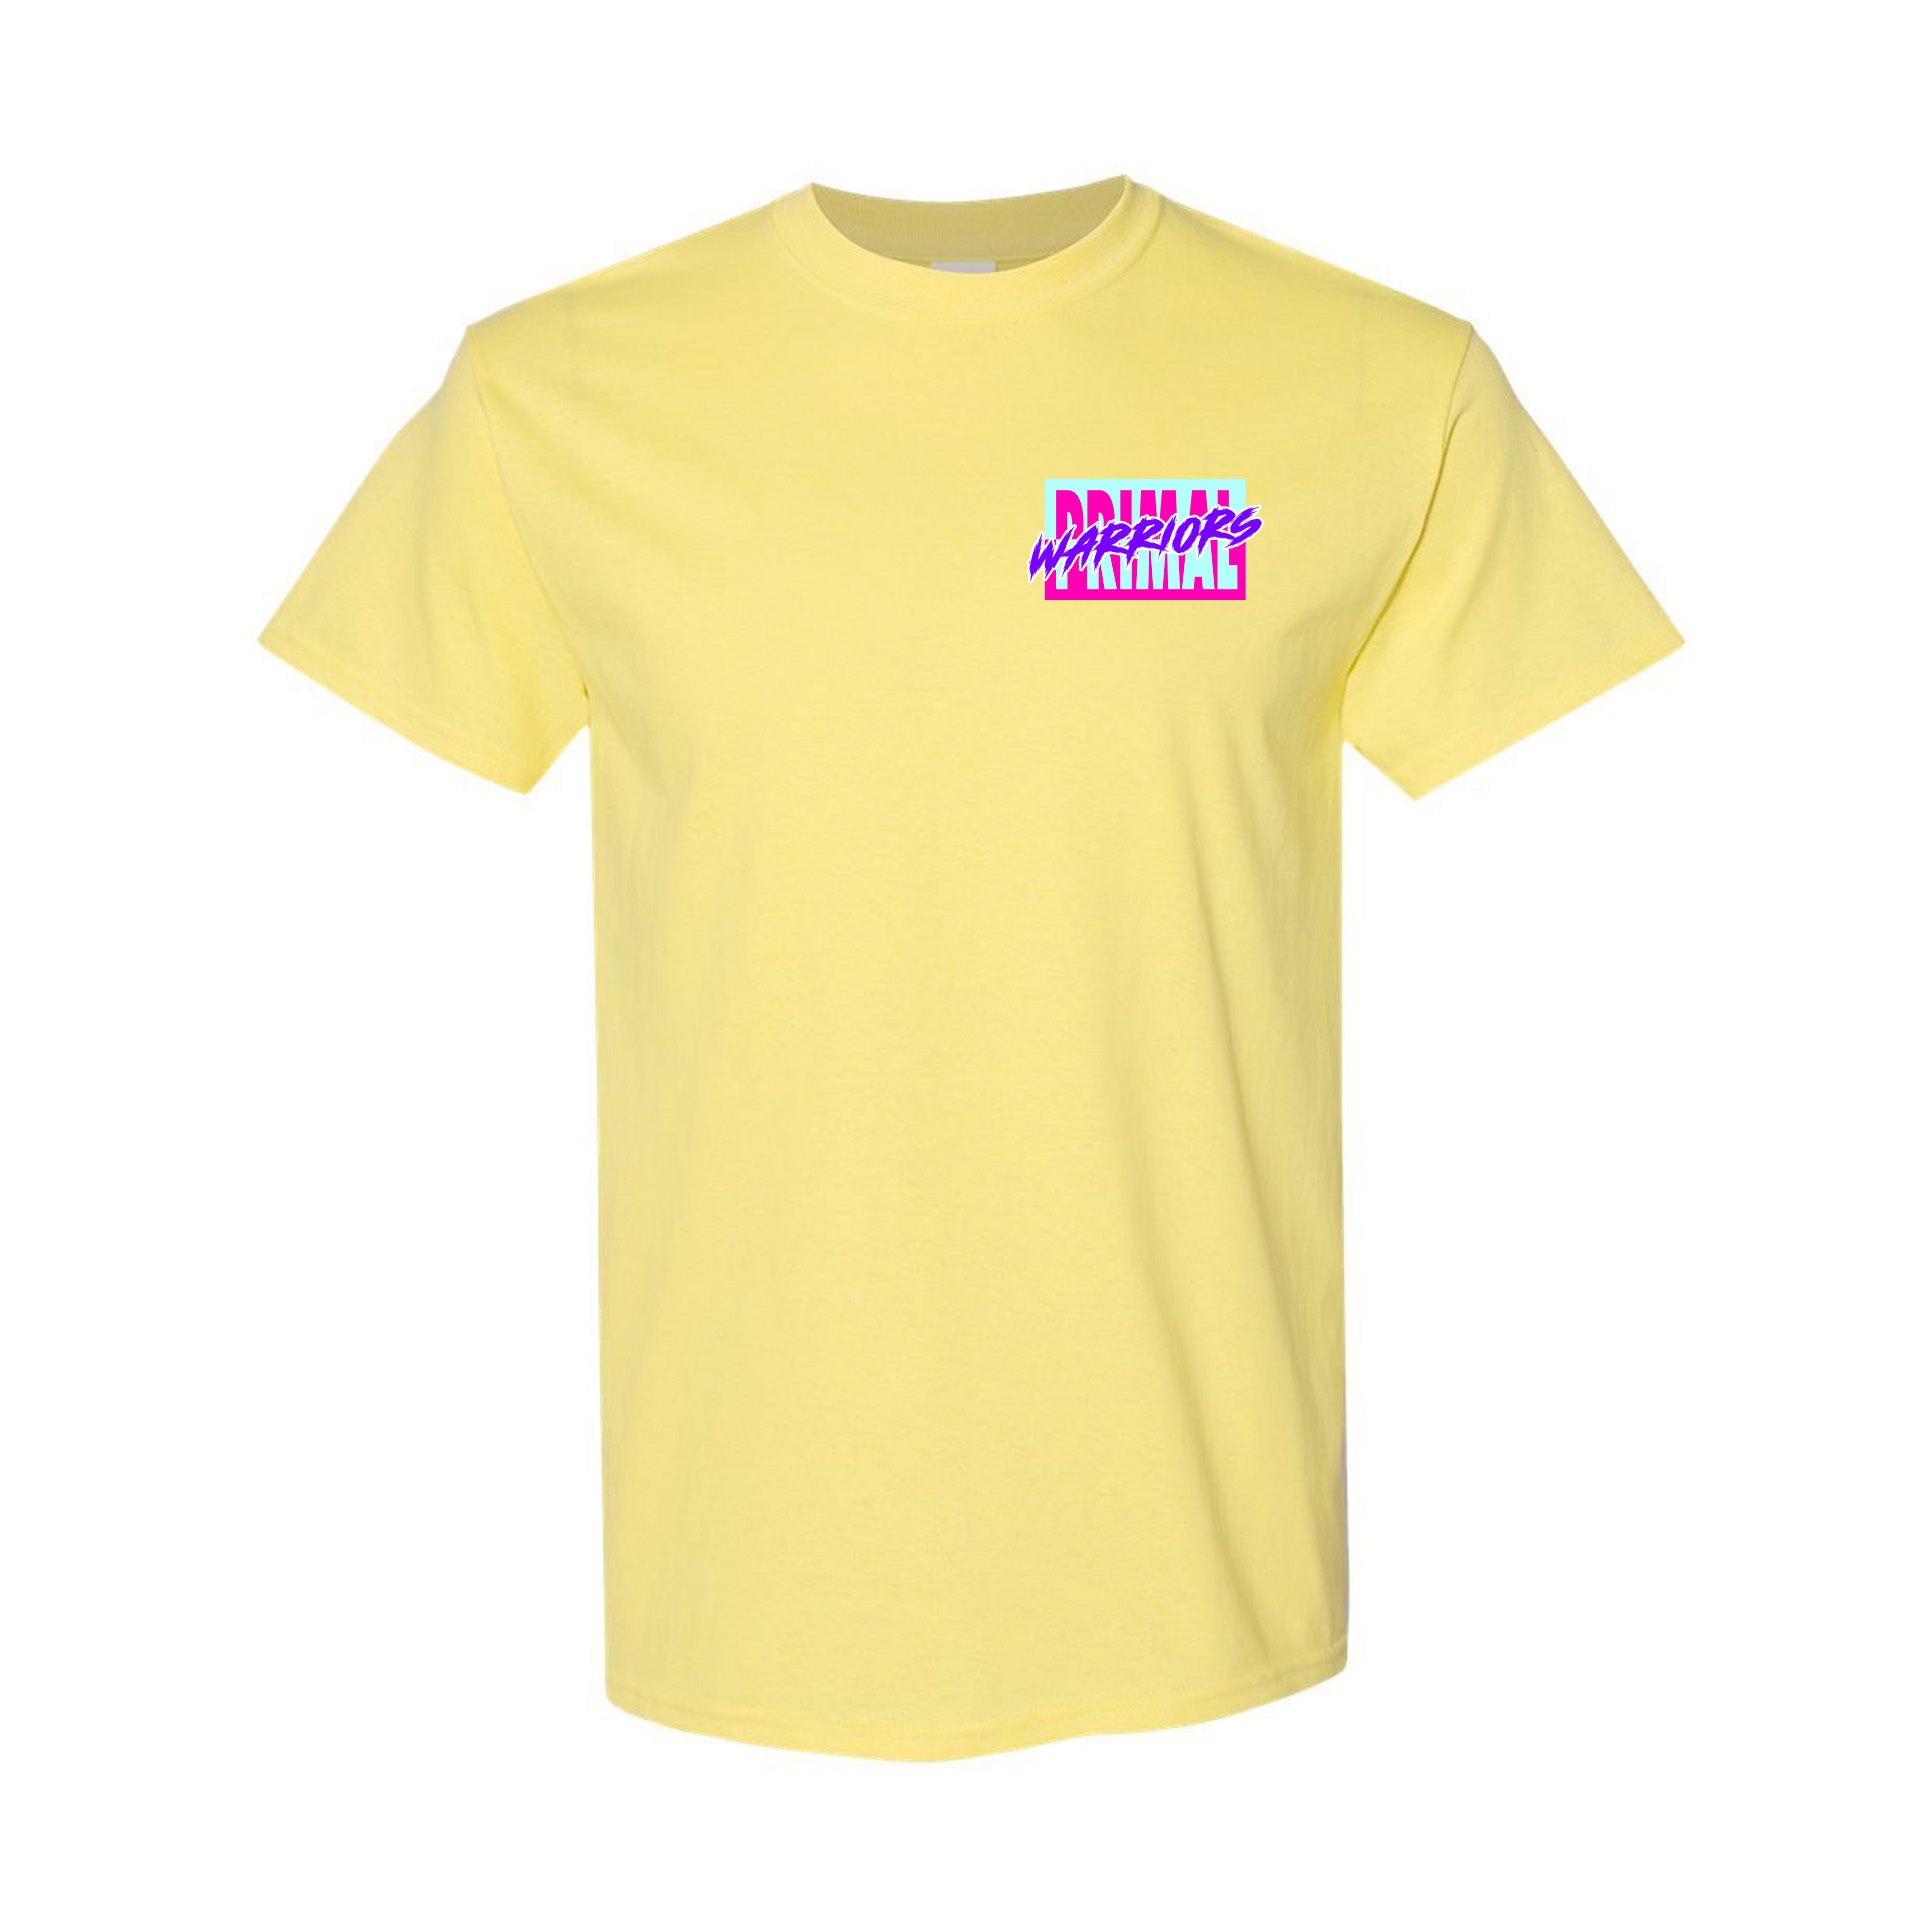 Muscle Factory T-Shirt (Yellow)